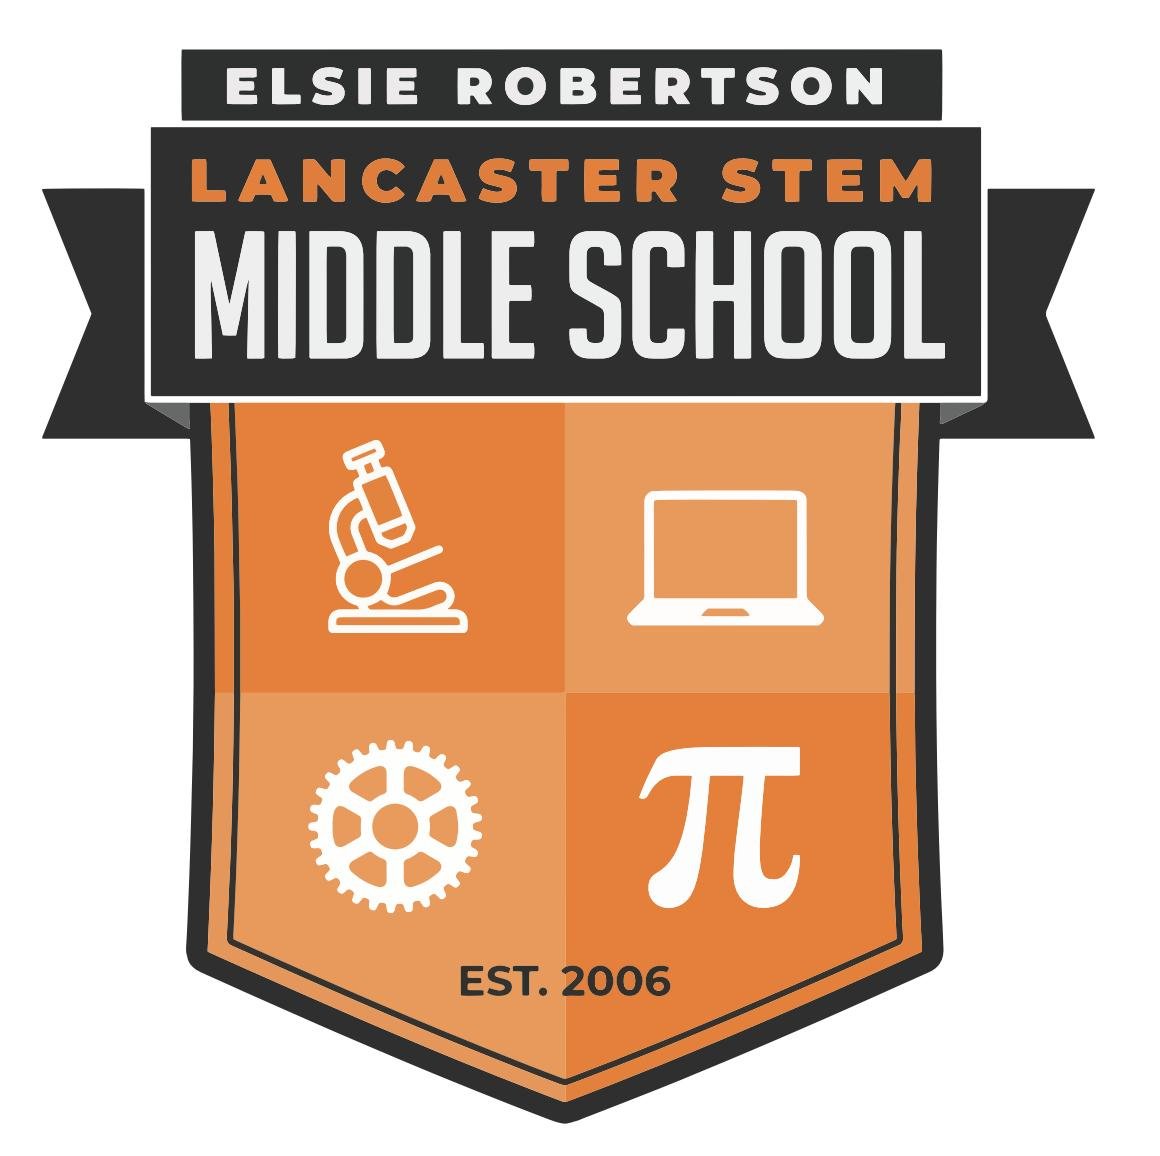 Official Twitter page for Elsie Robertson Lancaster STEM Middle School #WEBO #NextLevel #LancasterISD